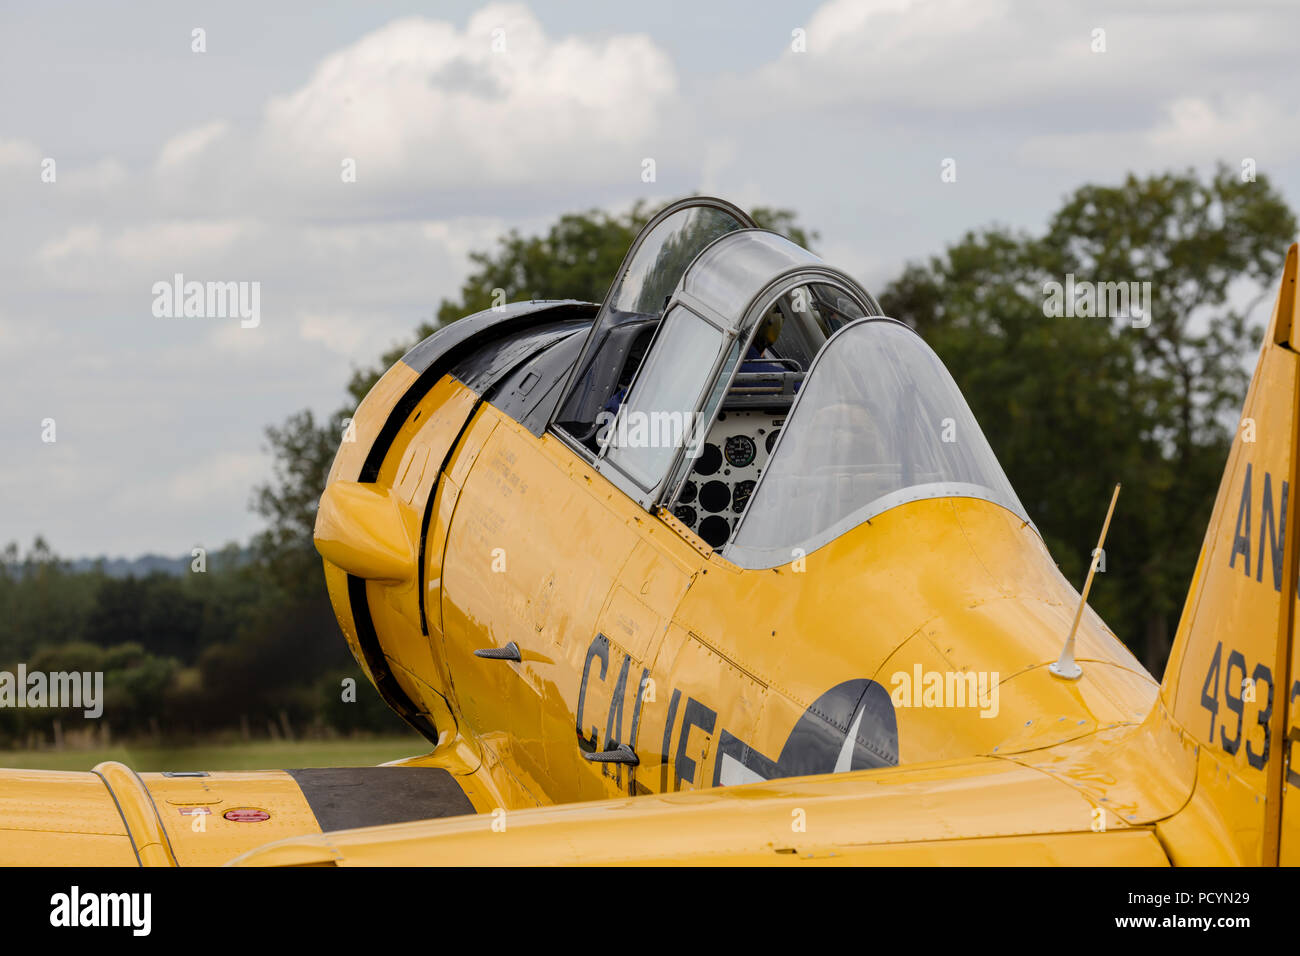 Rear view of a historic North American T-6 Texan Harvard aeroplane Stock Photo